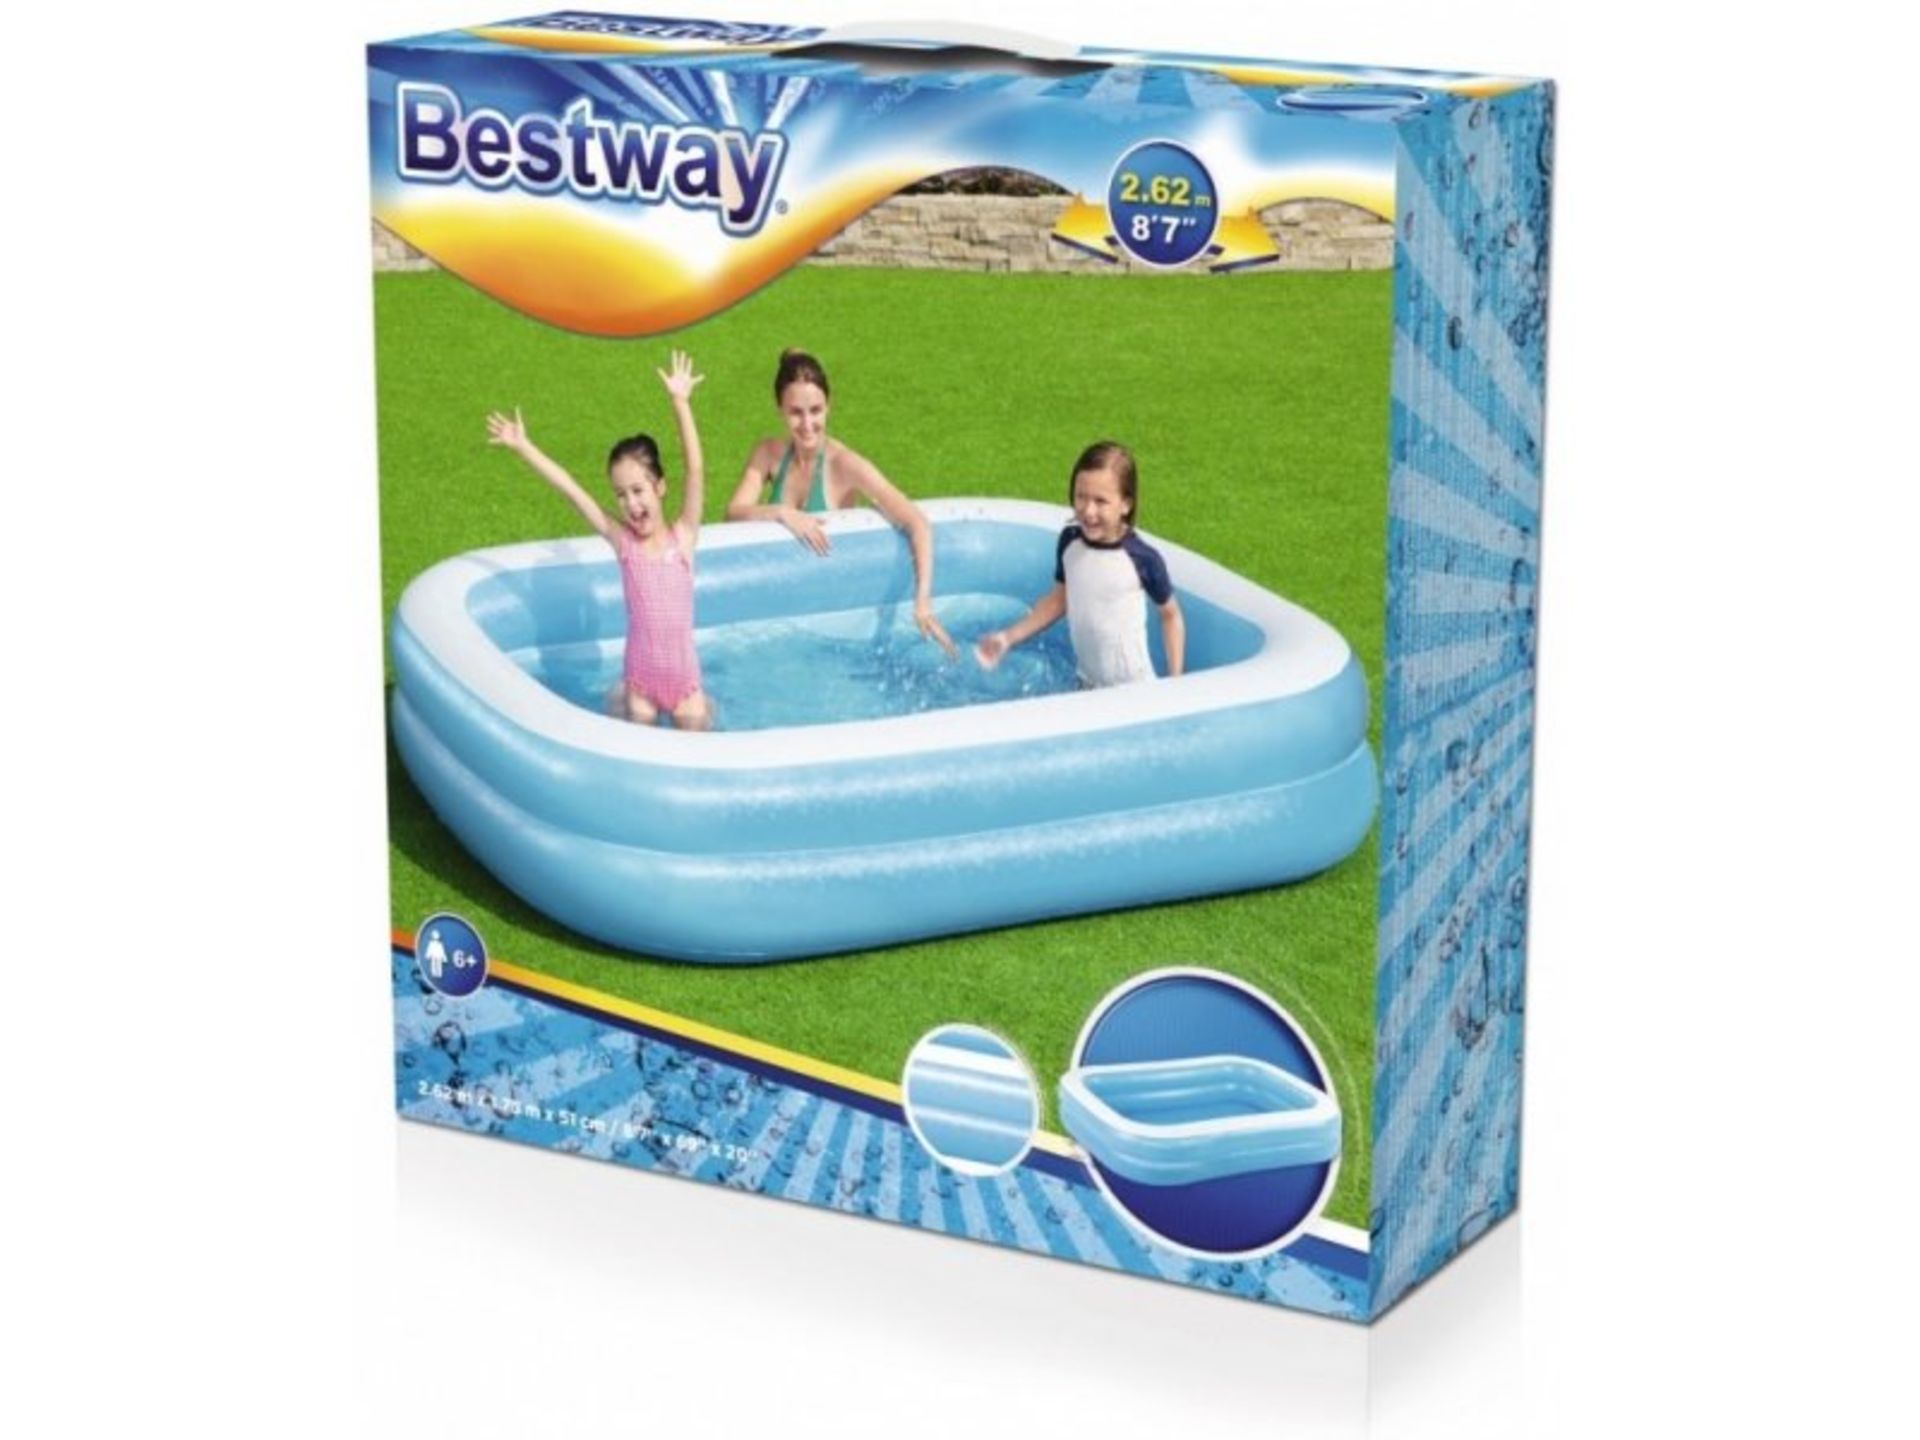 + VAT Brand New Bestway 8'7" Deluxe Rectangular Inflatable Paddling Pool - Two Interlock Quick